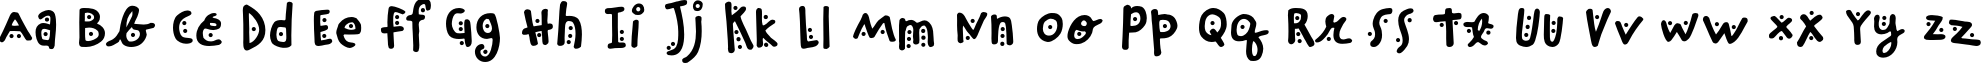 Пример написания английского алфавита шрифтом ChinchillaDots